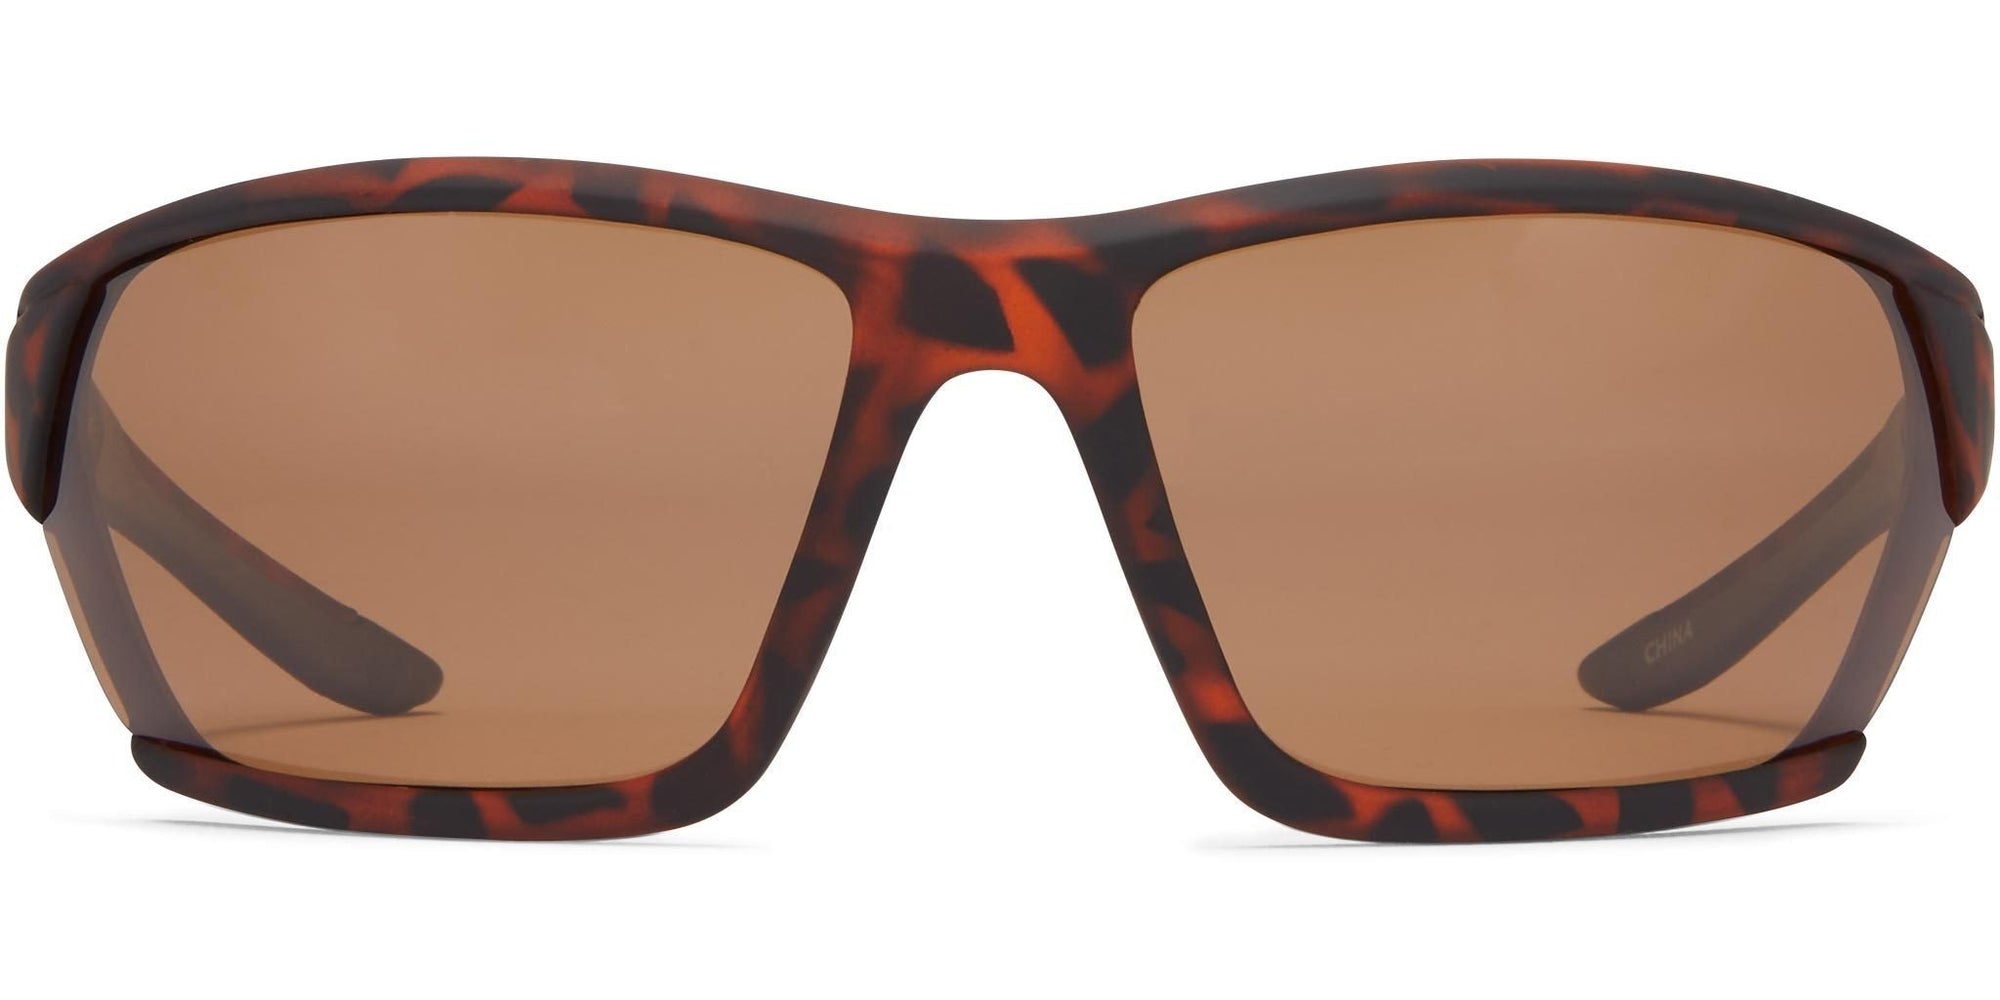 Breeze - Matte Tortoise/Brown Lens - Polarized Sunglasses